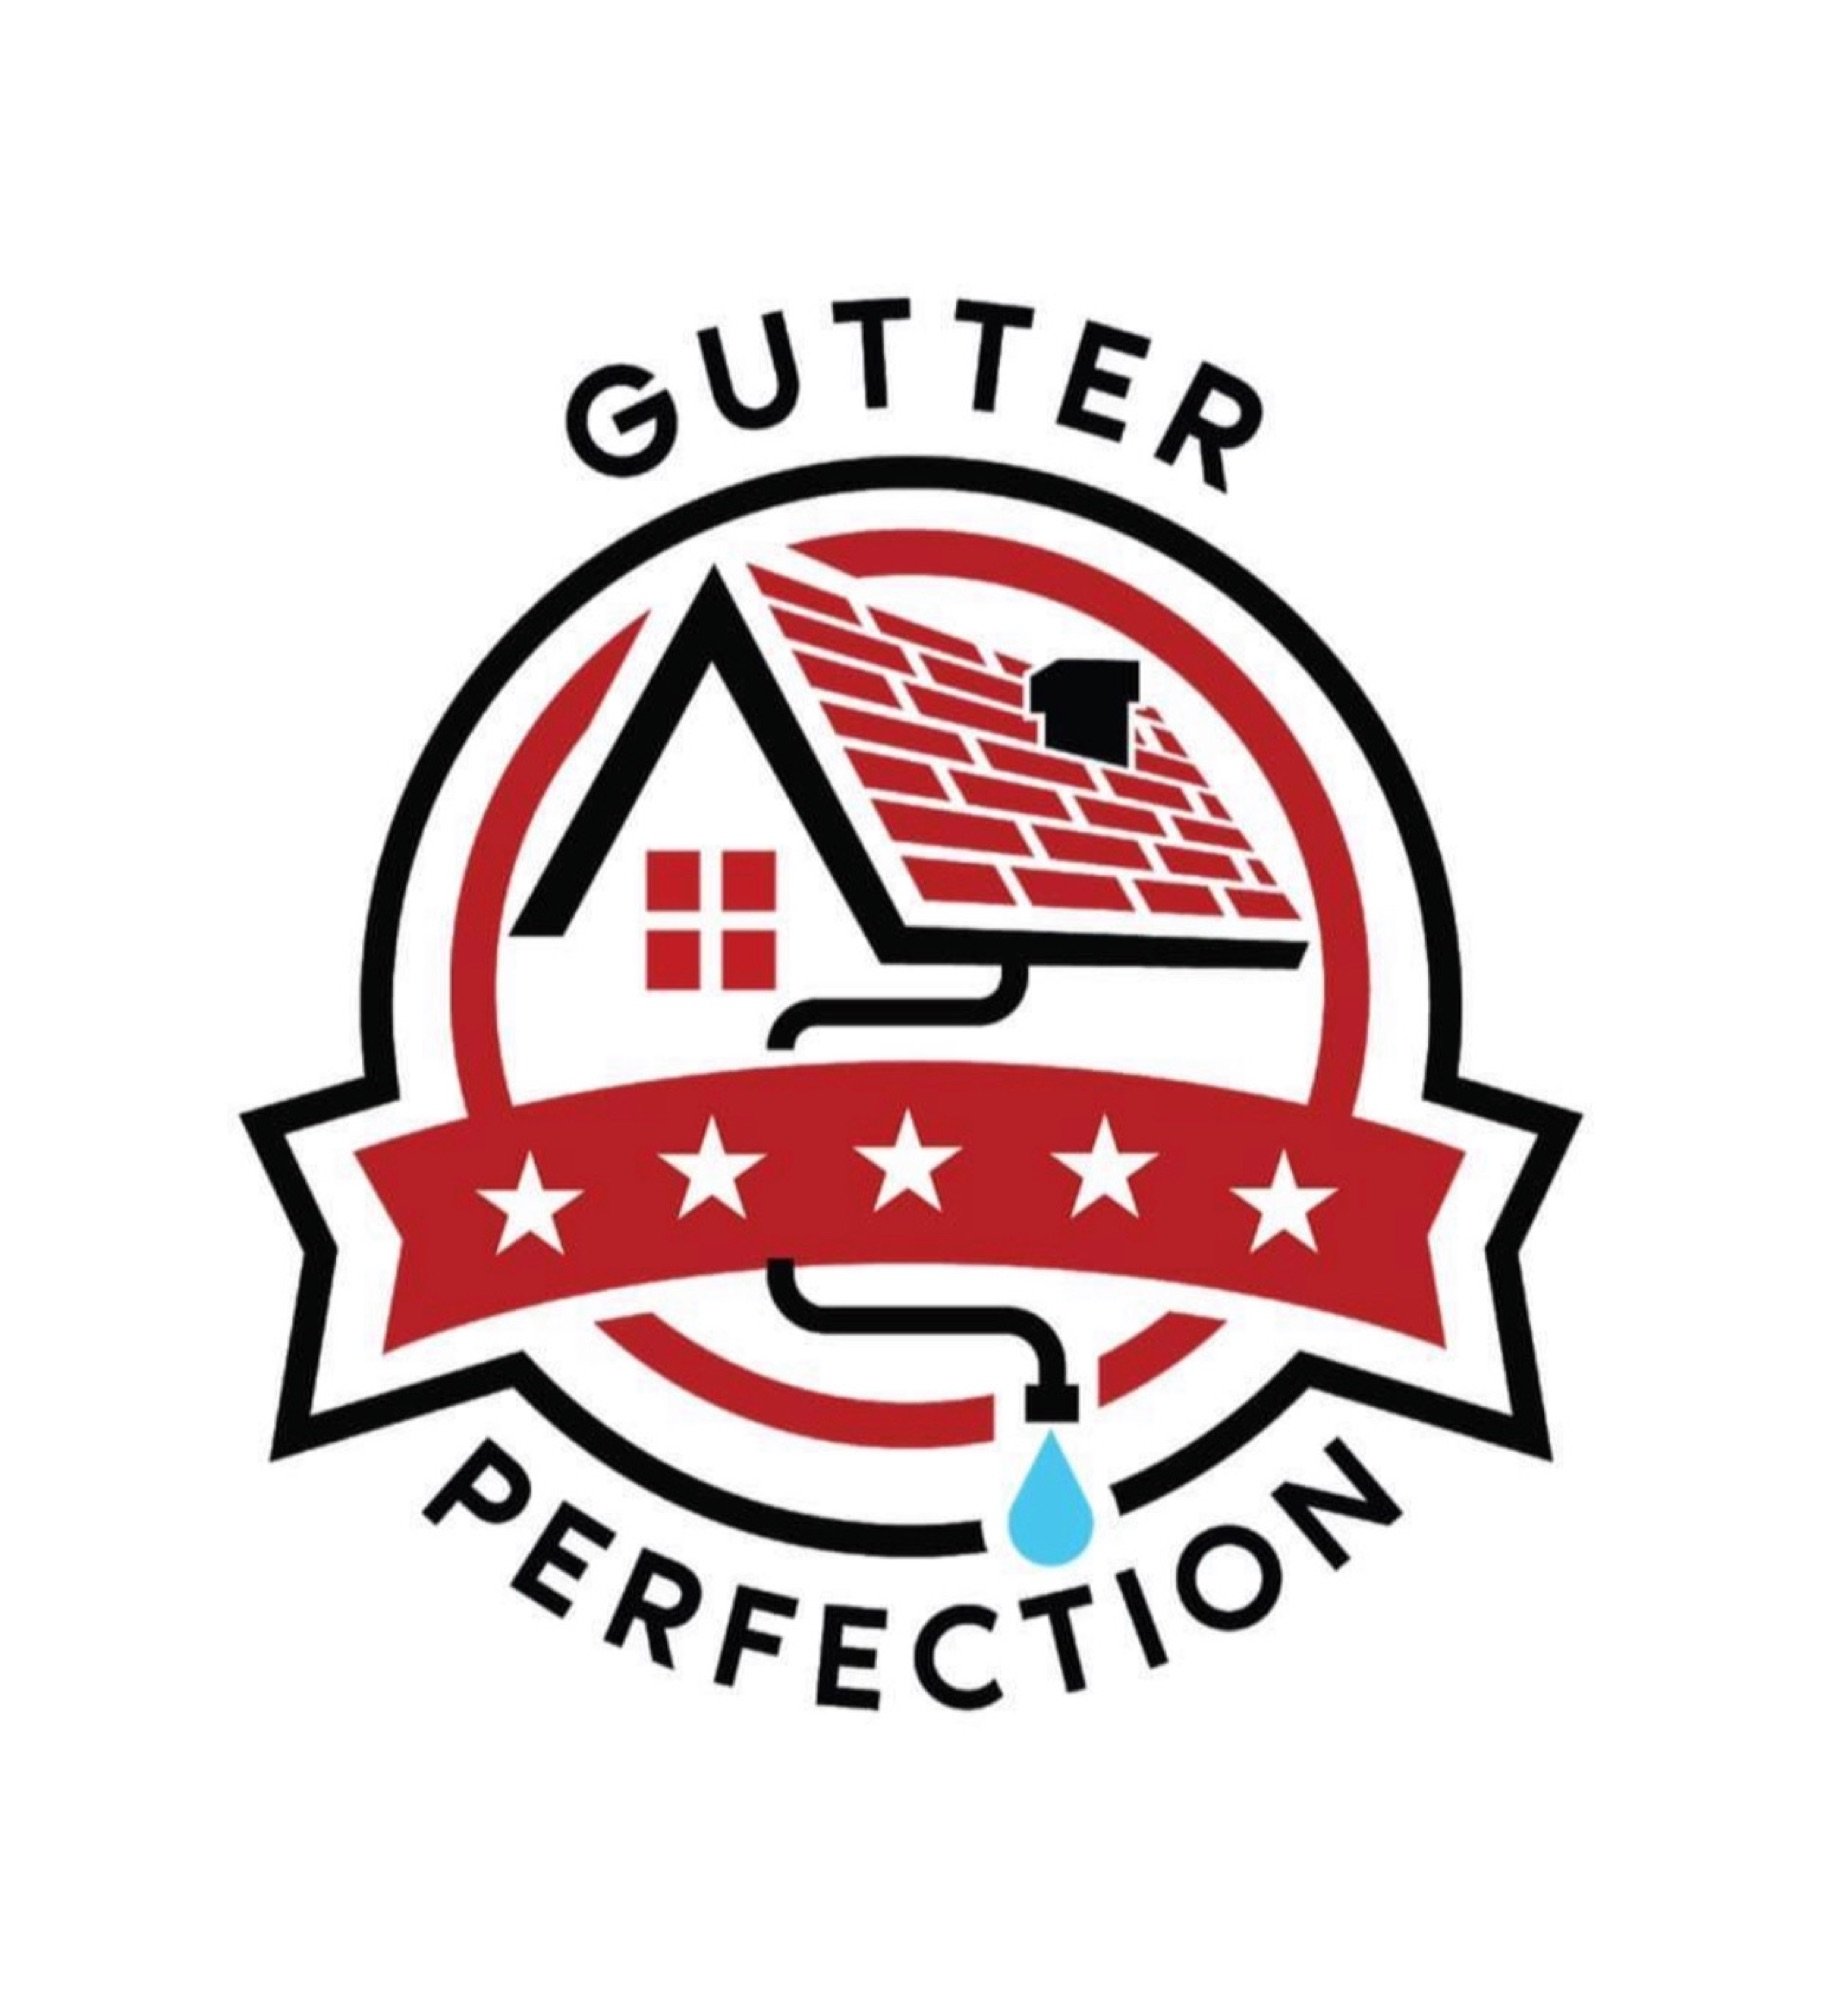 NWA Gutter Perfection Logo